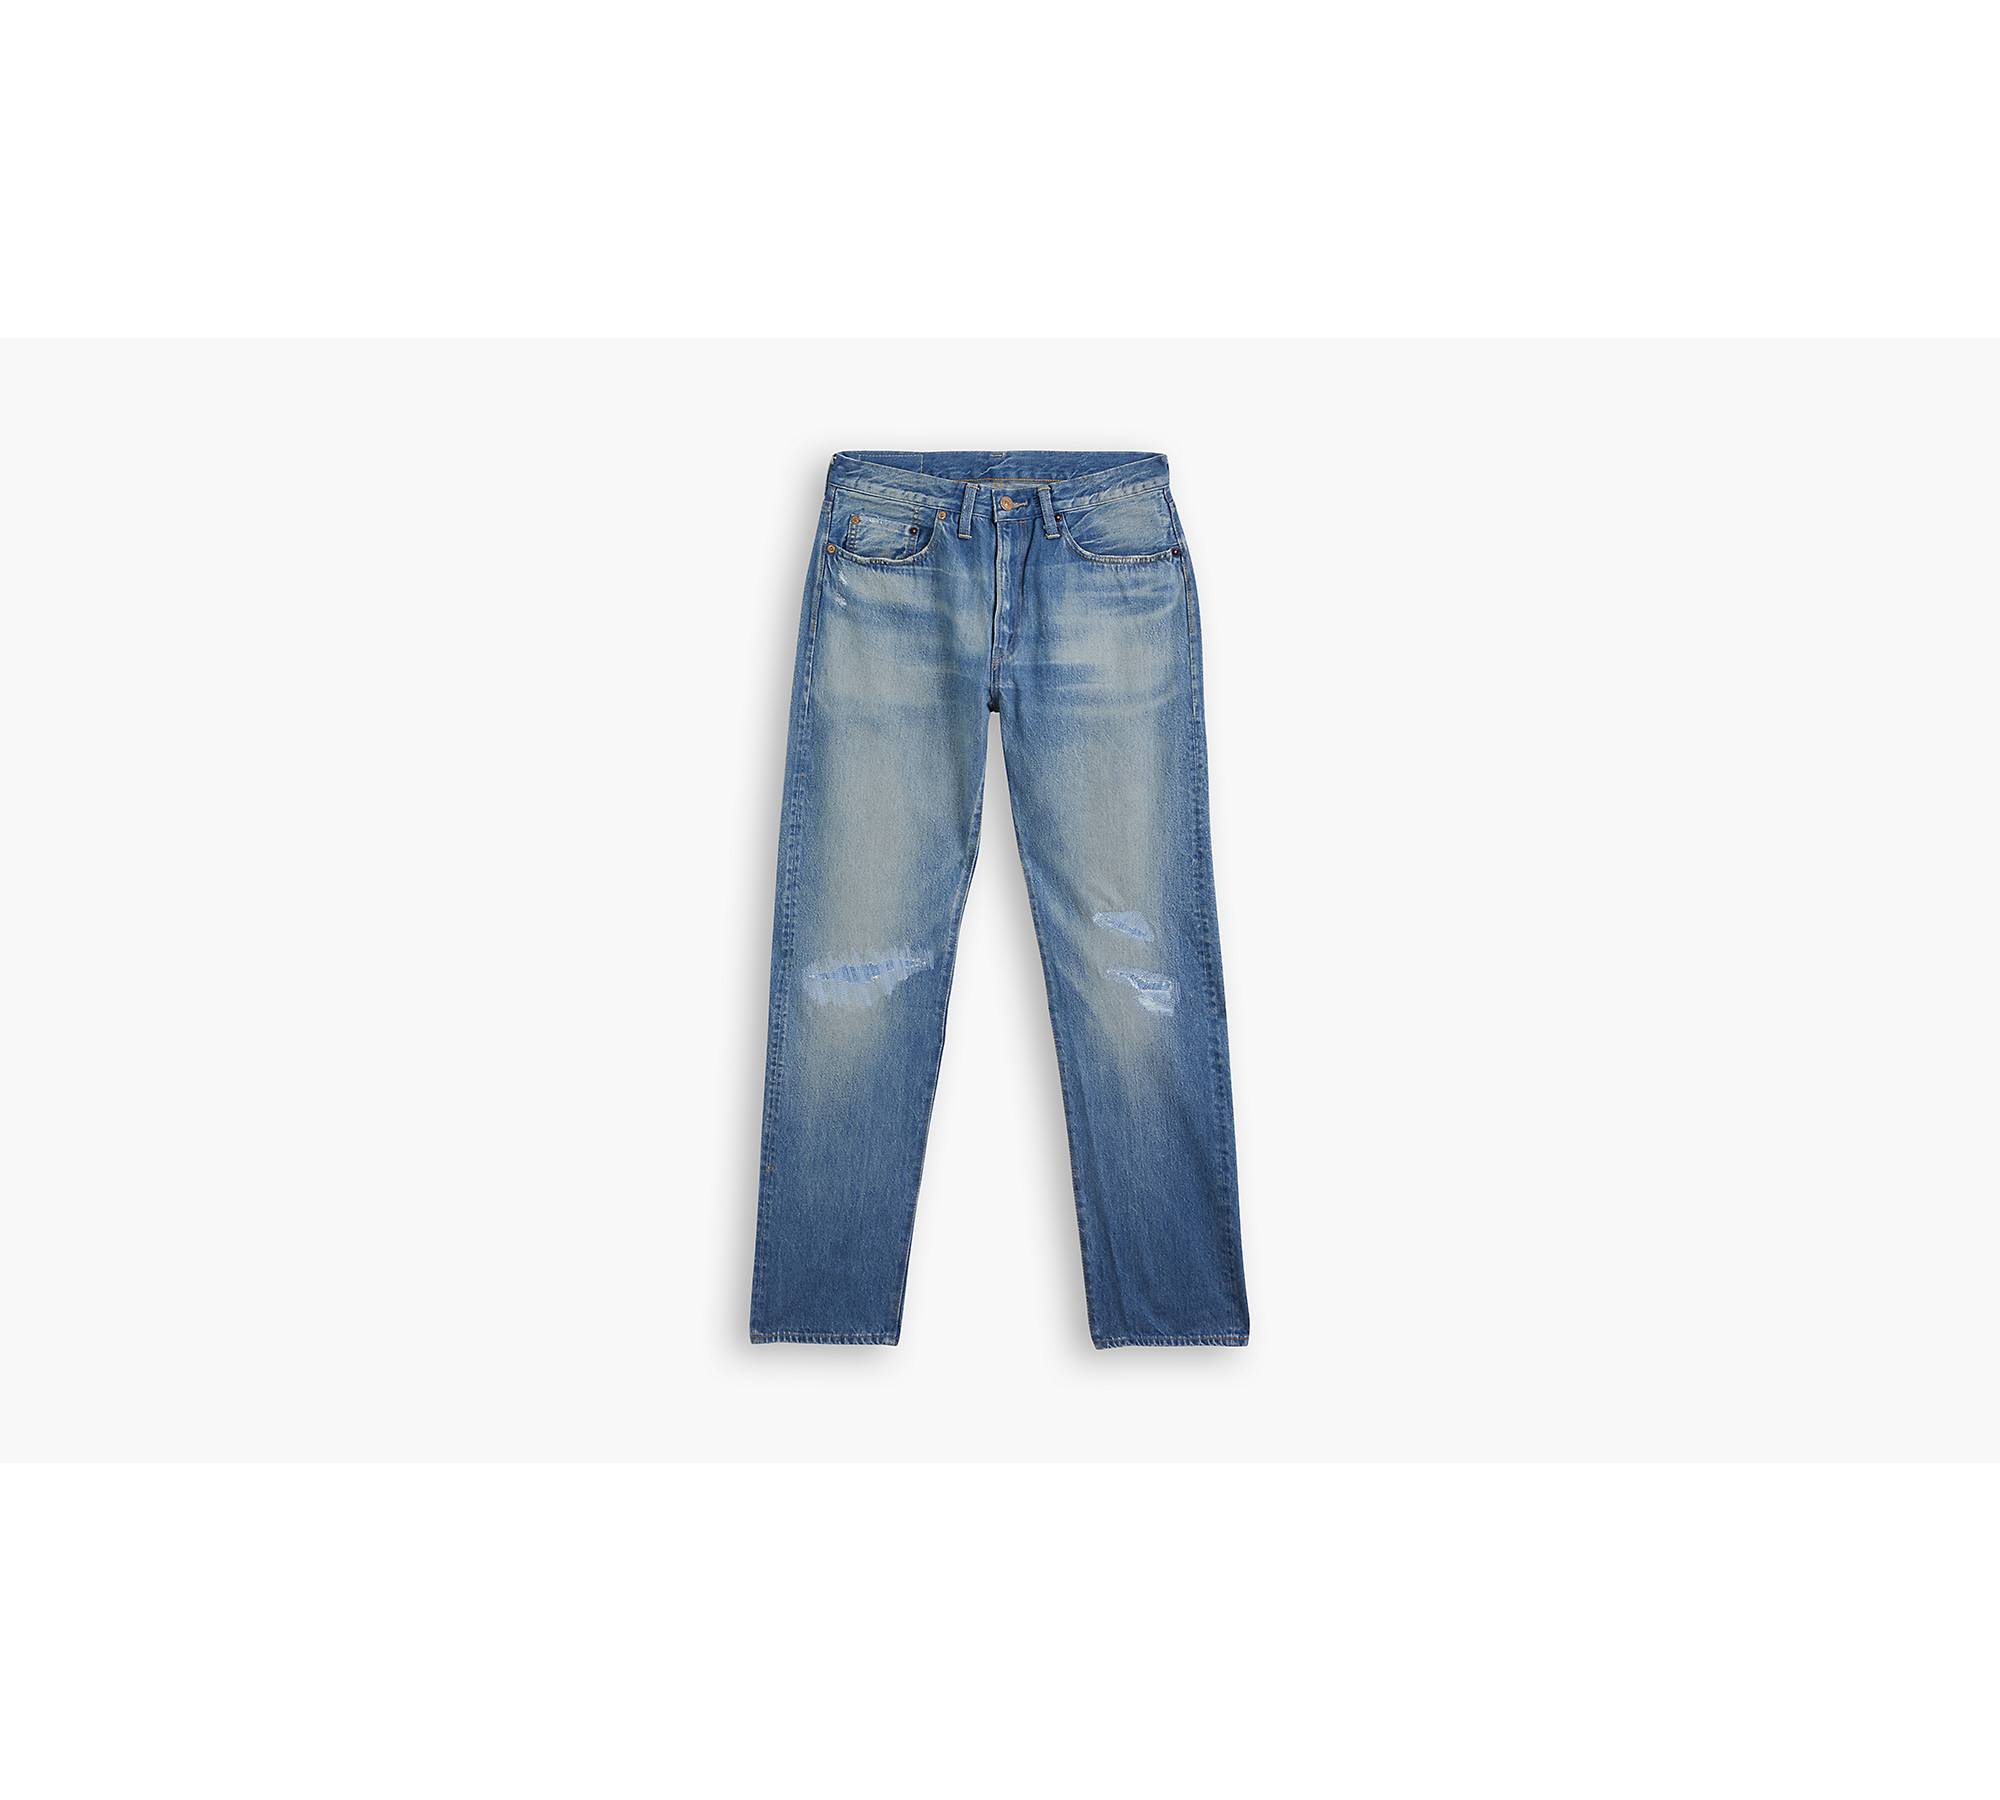 1954 501® Original Fit Men's Jeans - Light Wash